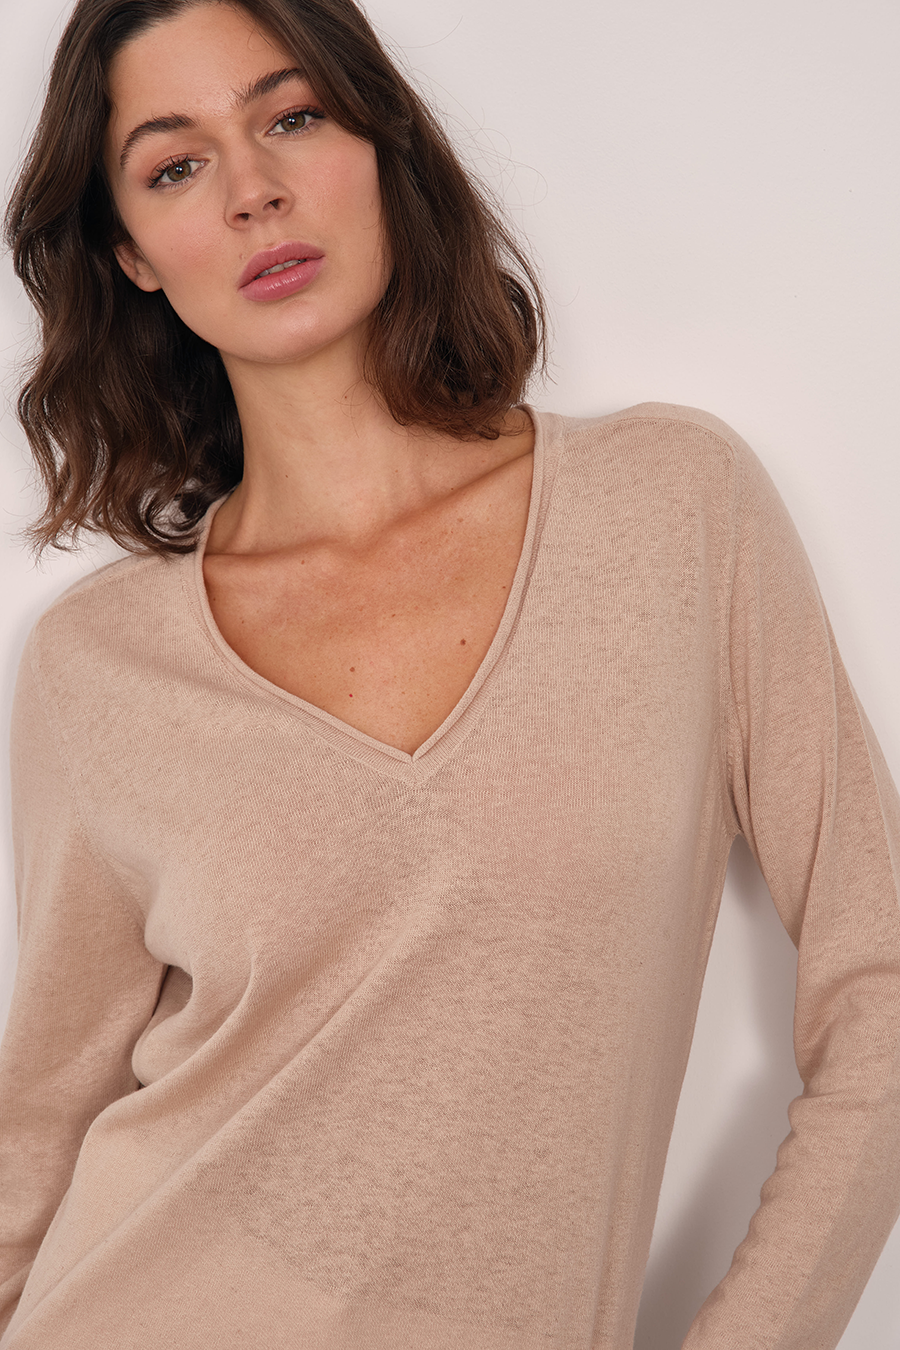 Lightweight V Neck Sweater in Cotton/Linen Blend